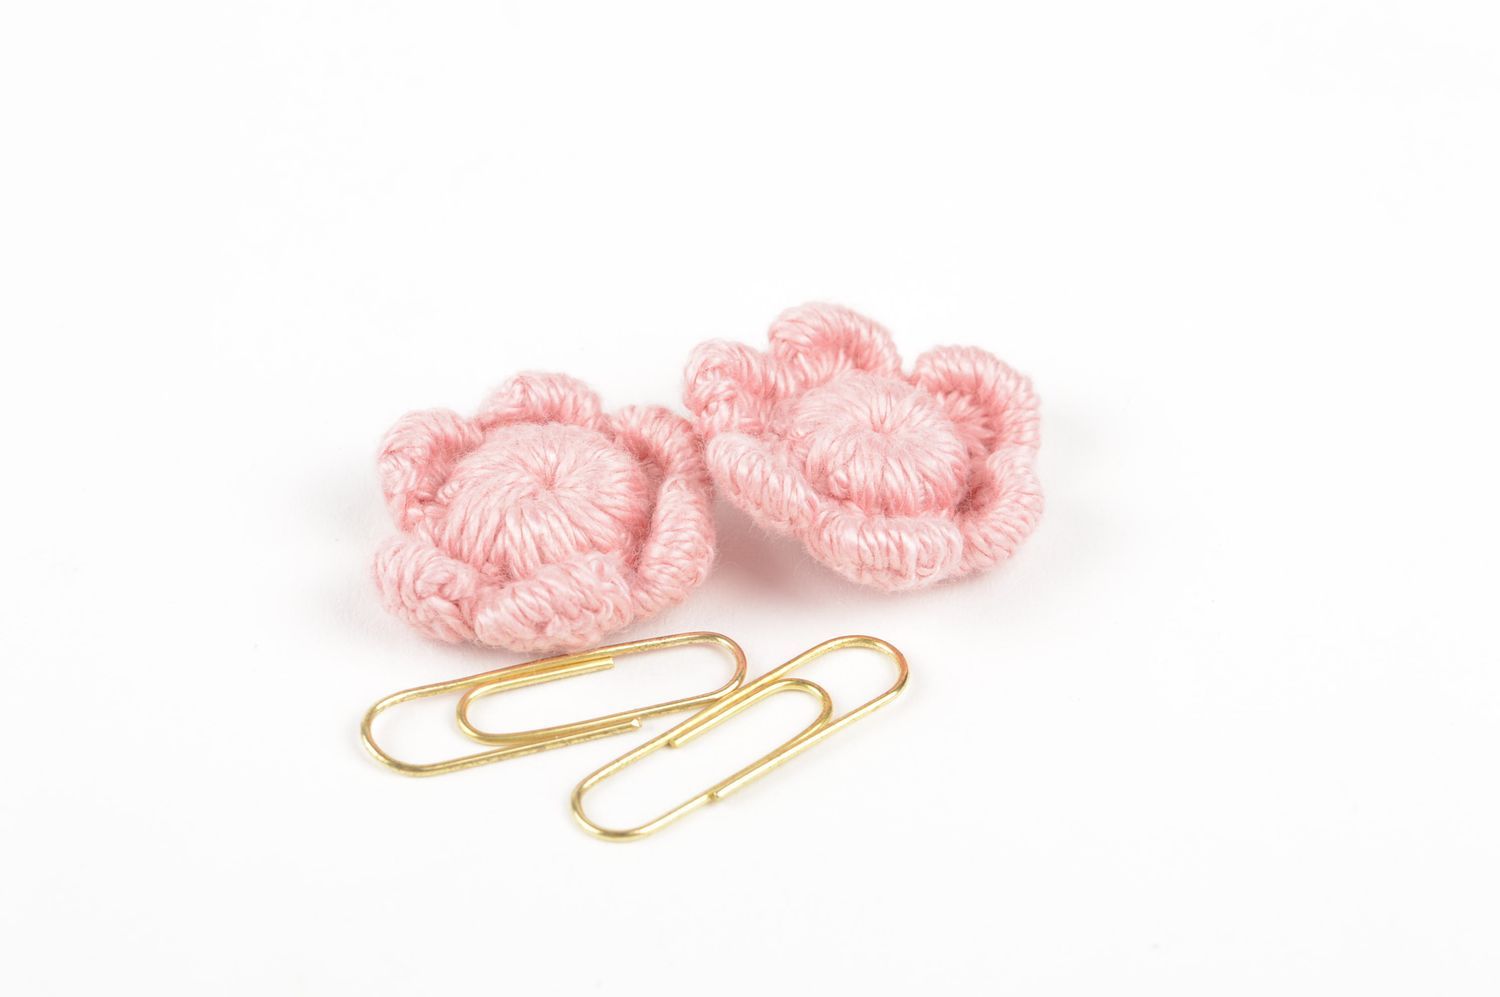 Handmade crocheted flower unusual pink brooch stylish designer fittings photo 5